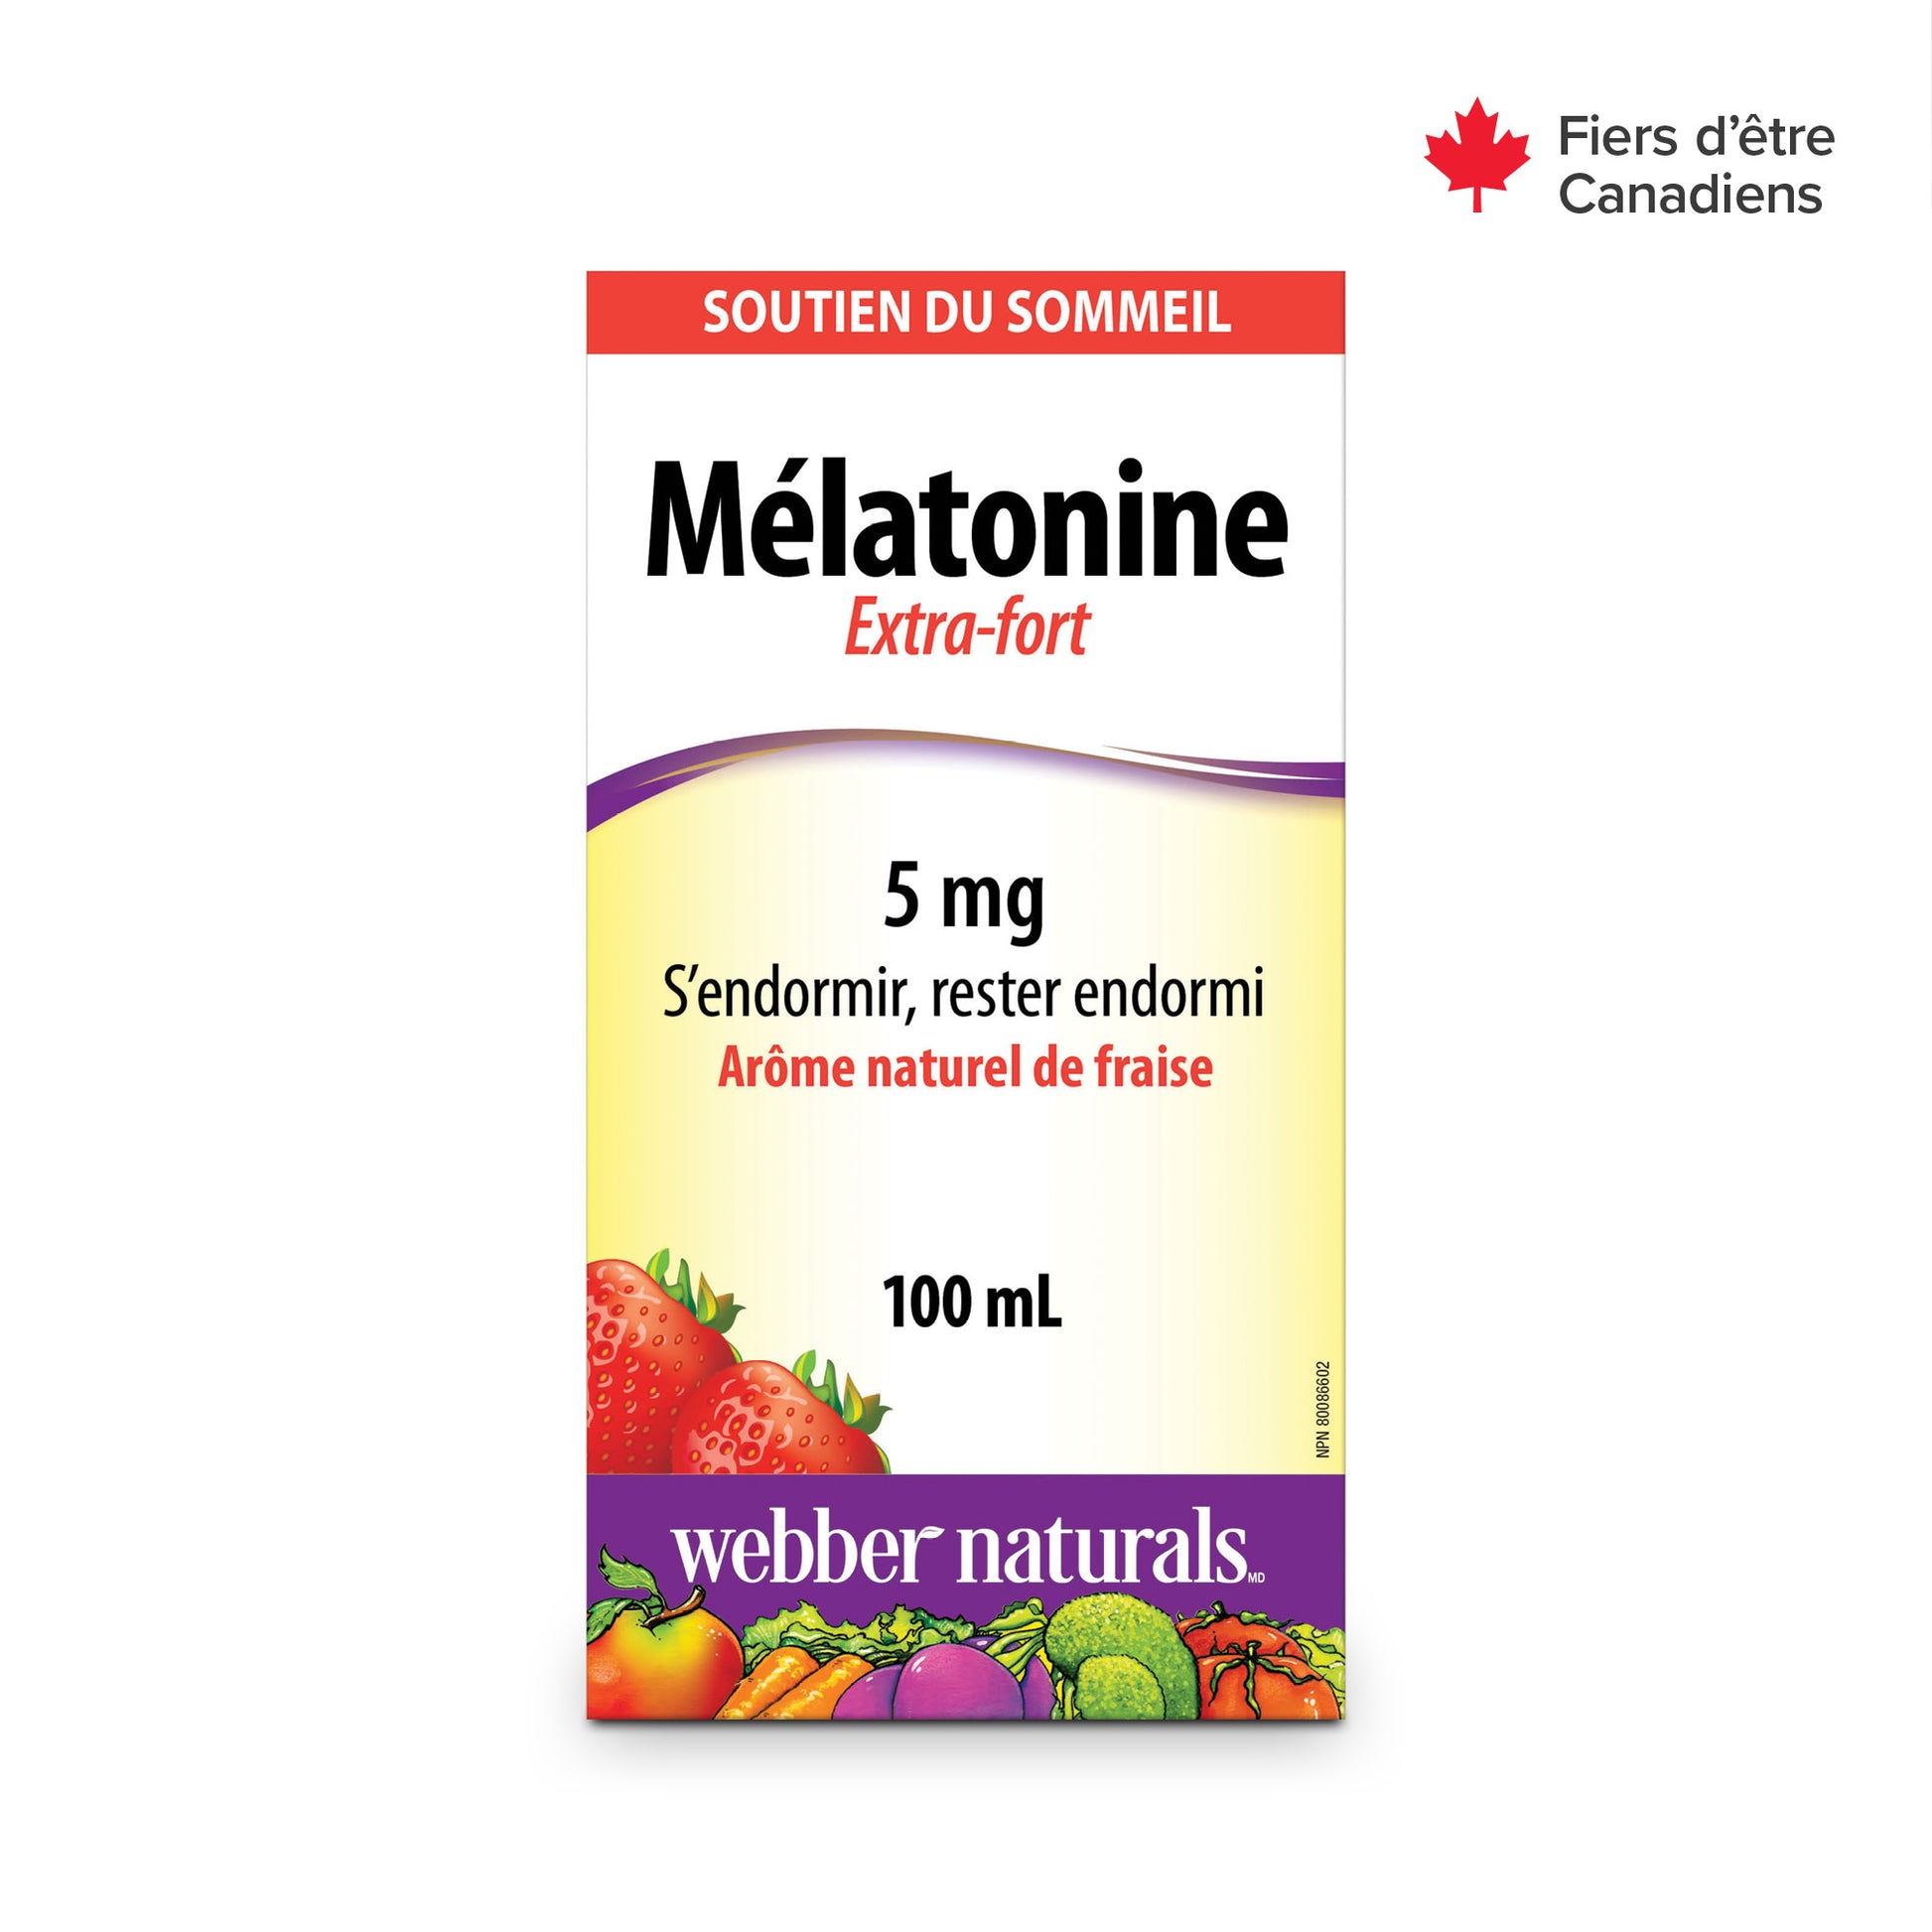 Melatonin Extra Strength 5 mg Natural Strawberry for Webber Naturals|v|hi-res|WN3599